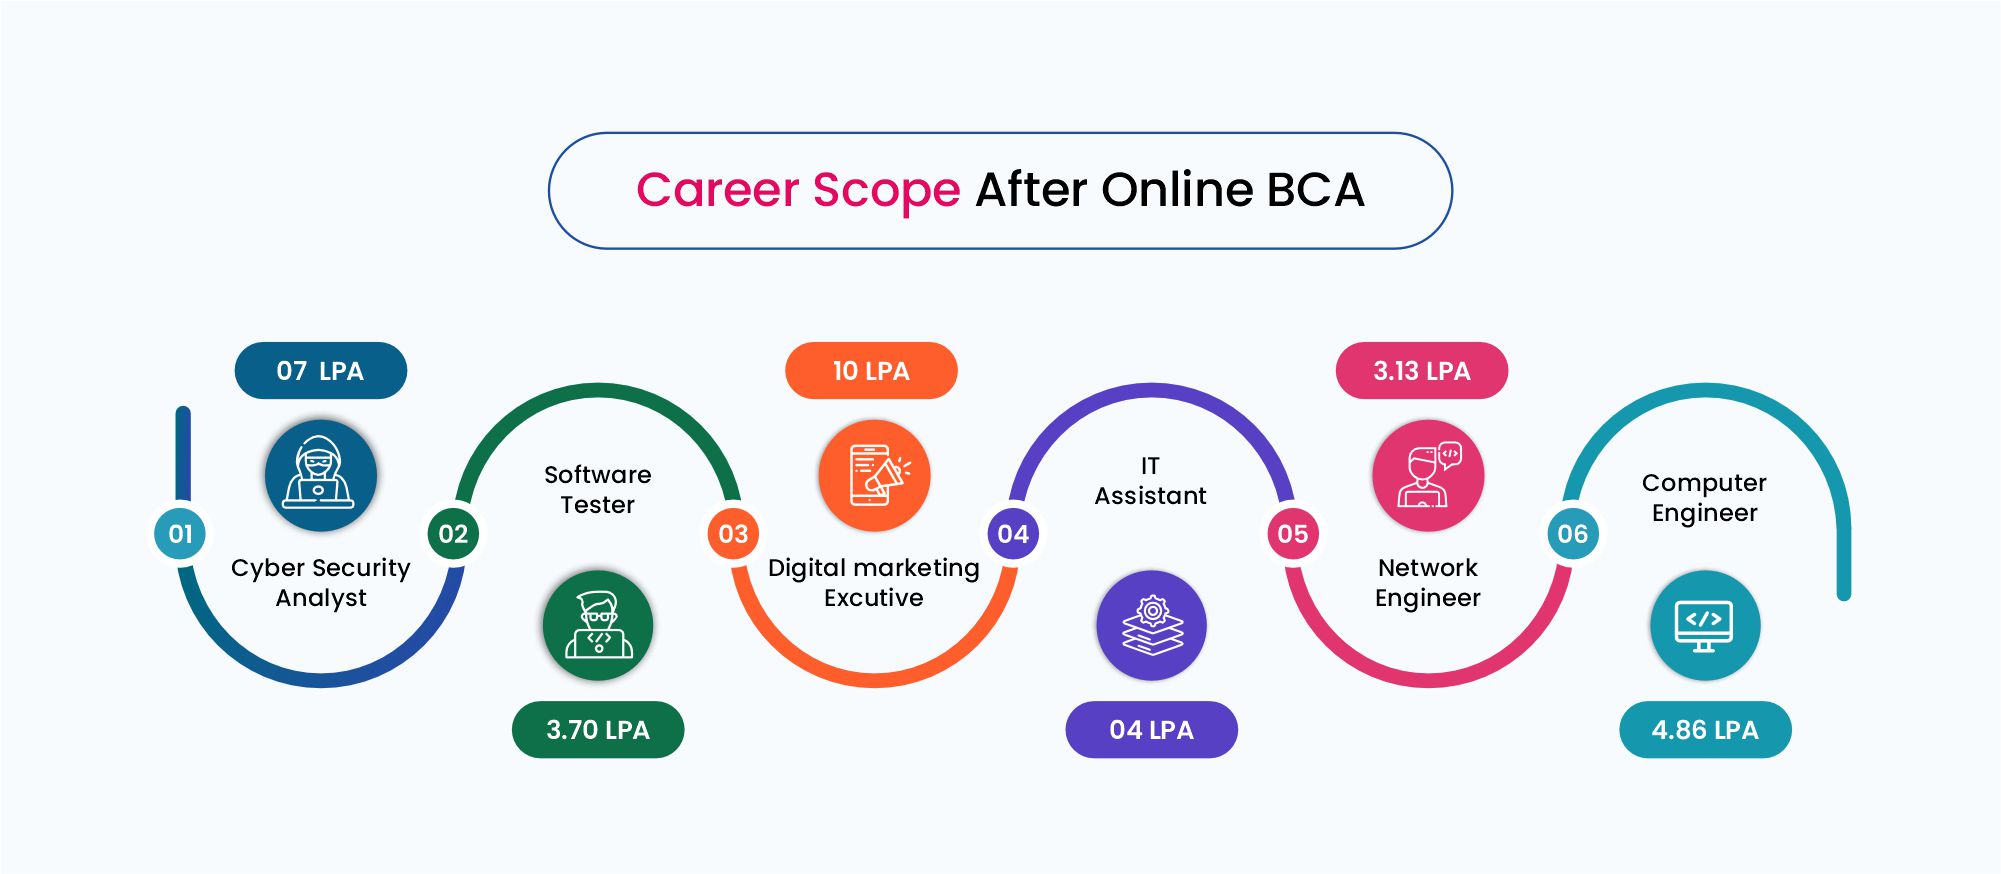 Online BCA career